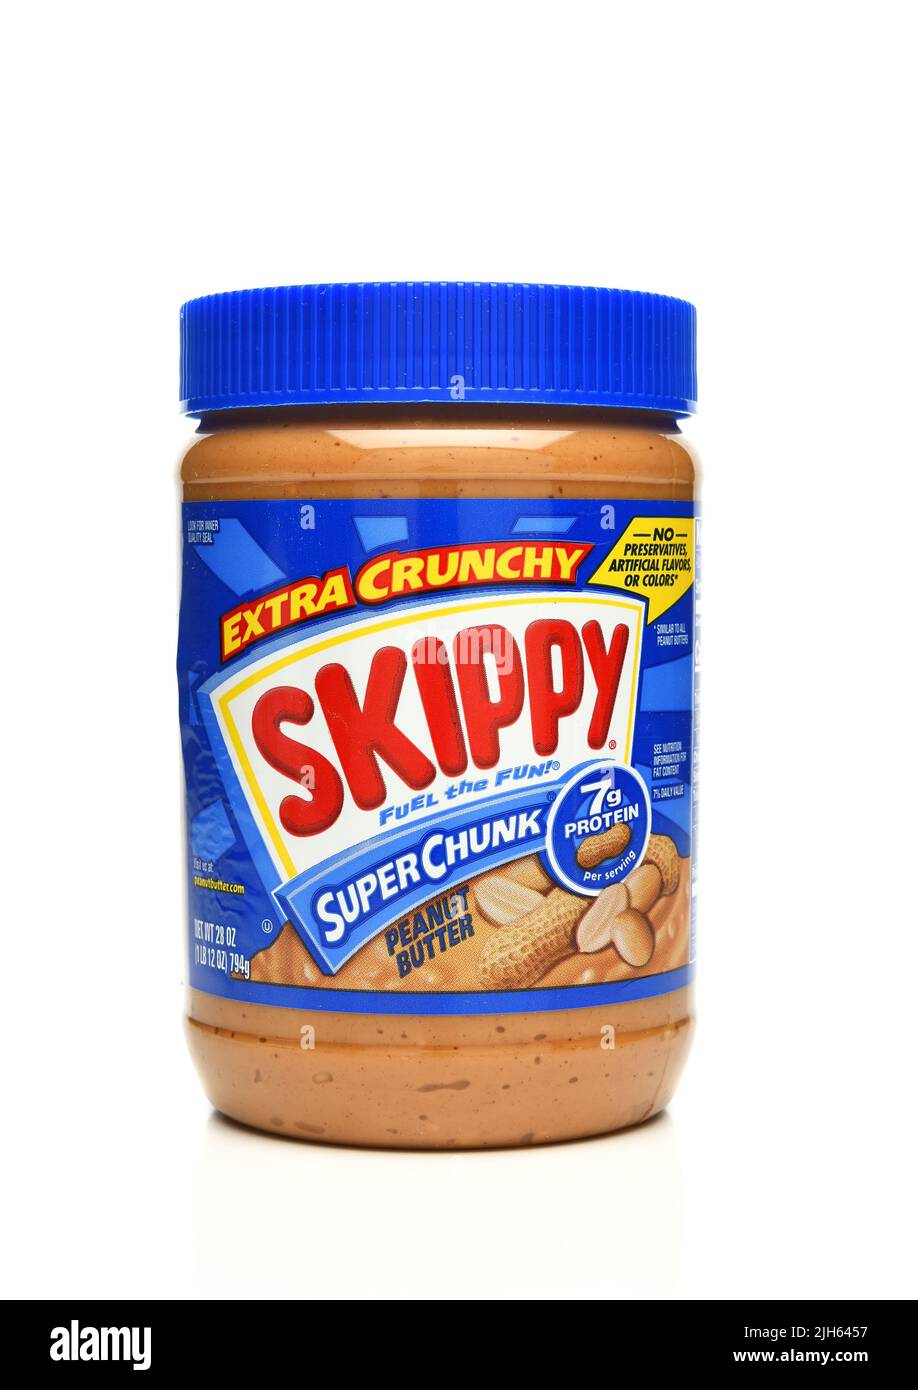 IRVINE, CALIFORNIA - 15 JUL 2022: A jar of Skippy Extra Crunch Super Chunk Peanut Butter. Stock Photo